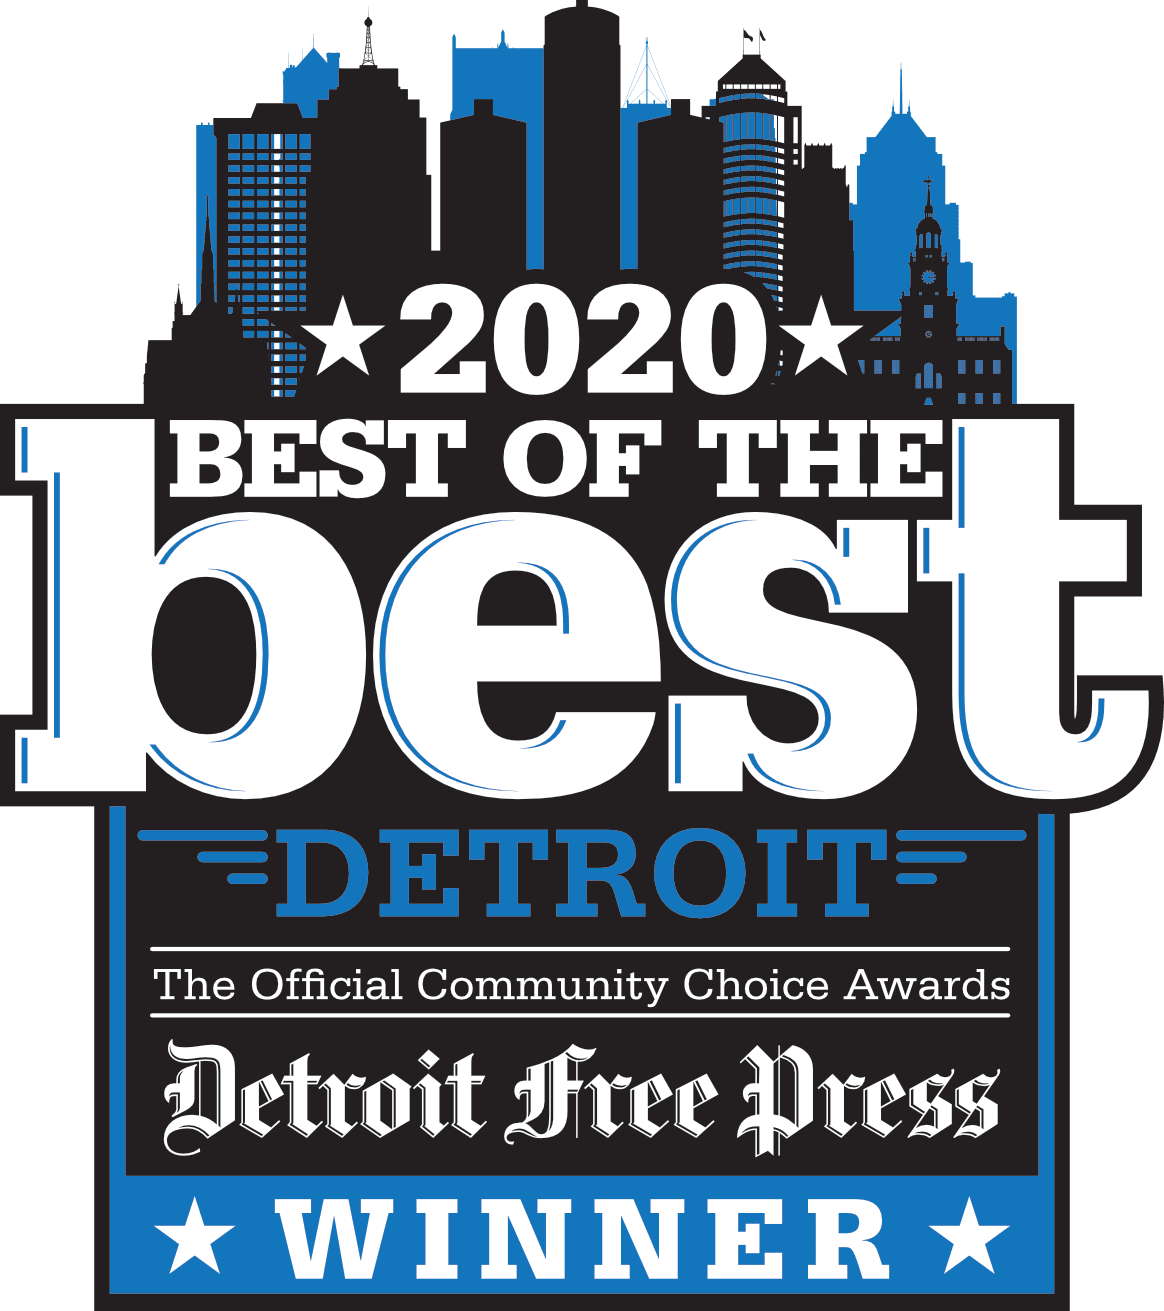 2020 Best Of The Best Detroit